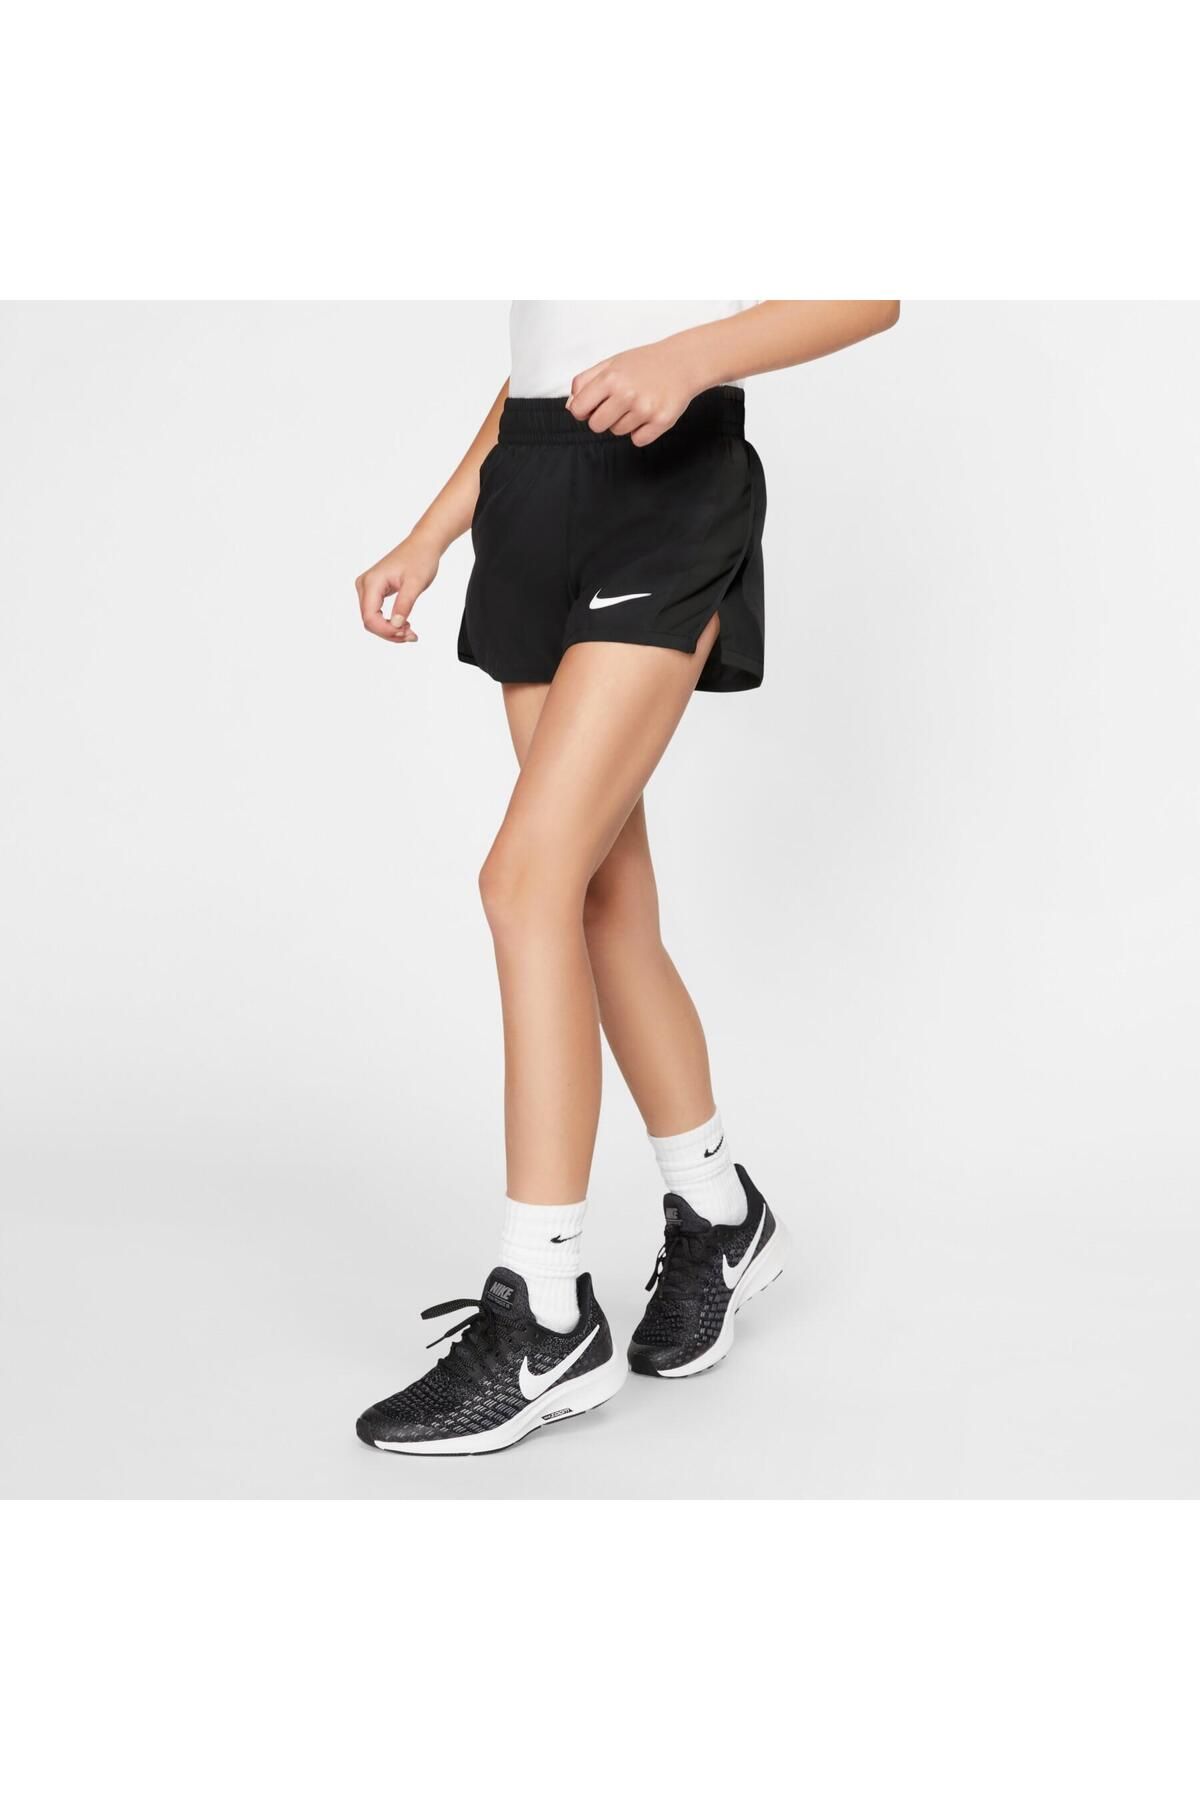 Nike Dri-Fit Siyah Kız Çocuk Koşu Şort 890519-010